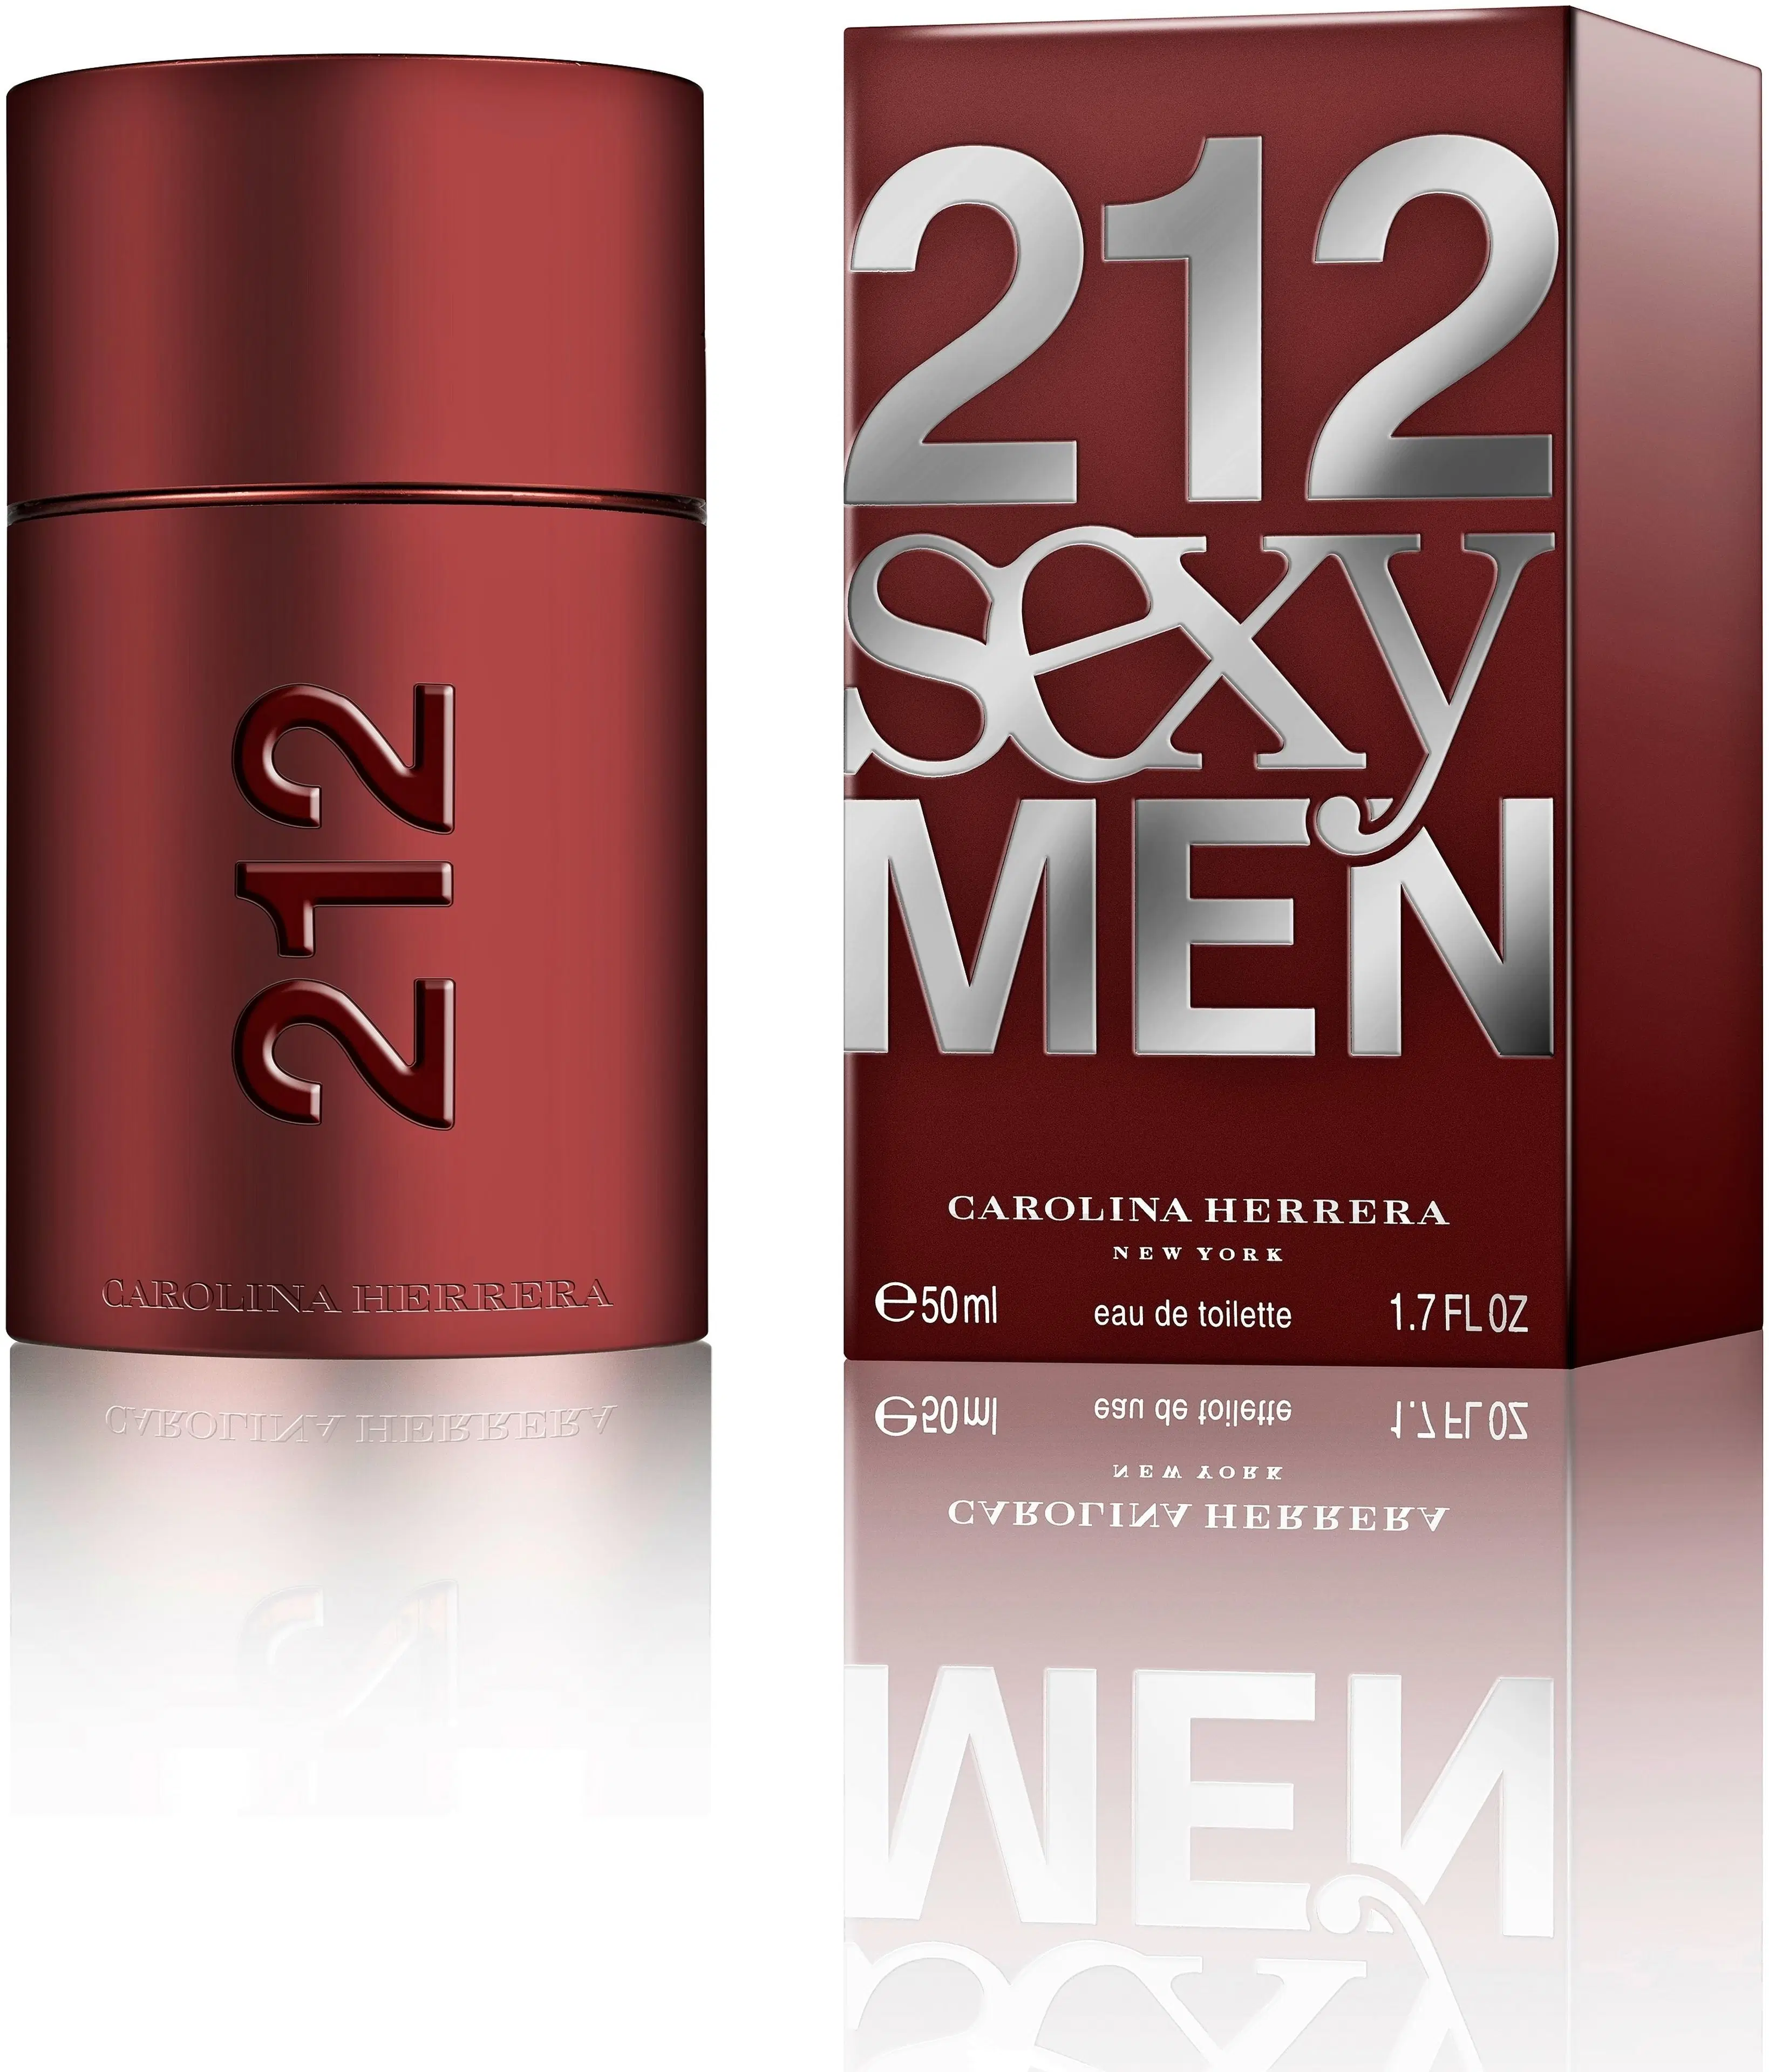 Carolina Herrera 212 Sexy Men EdT tuoksu 50 ml